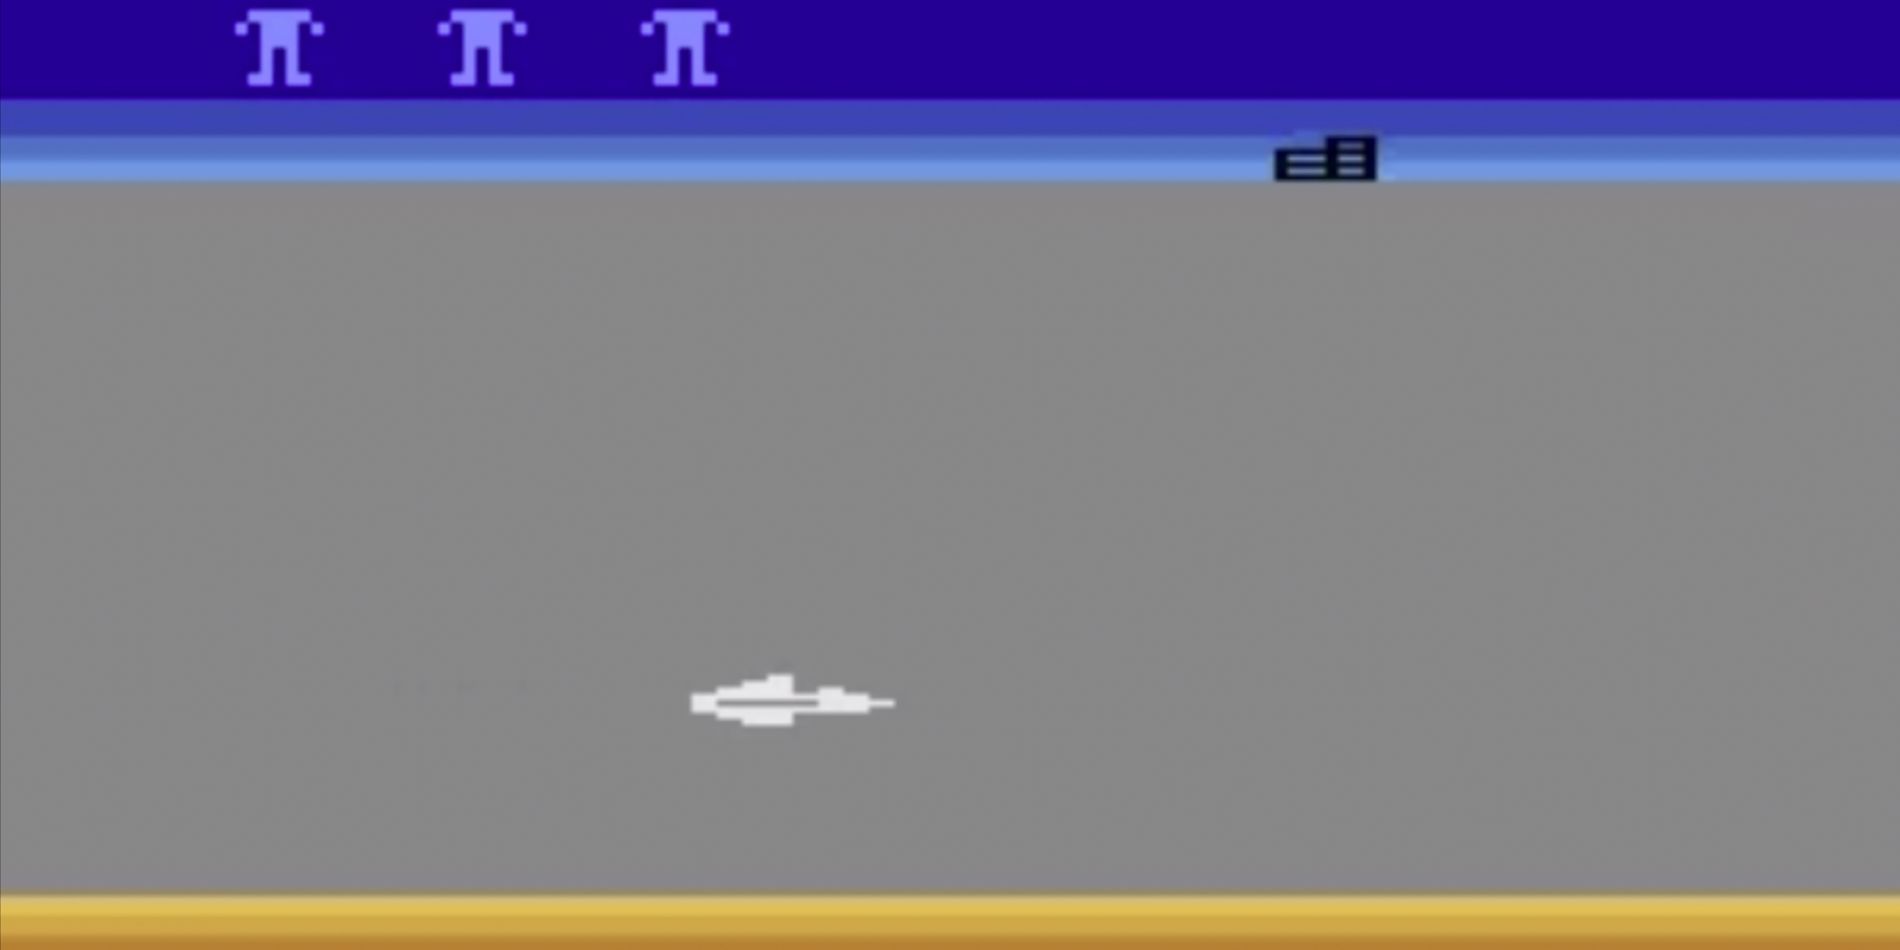 Flying through space on the Atari 2600 Star Fox